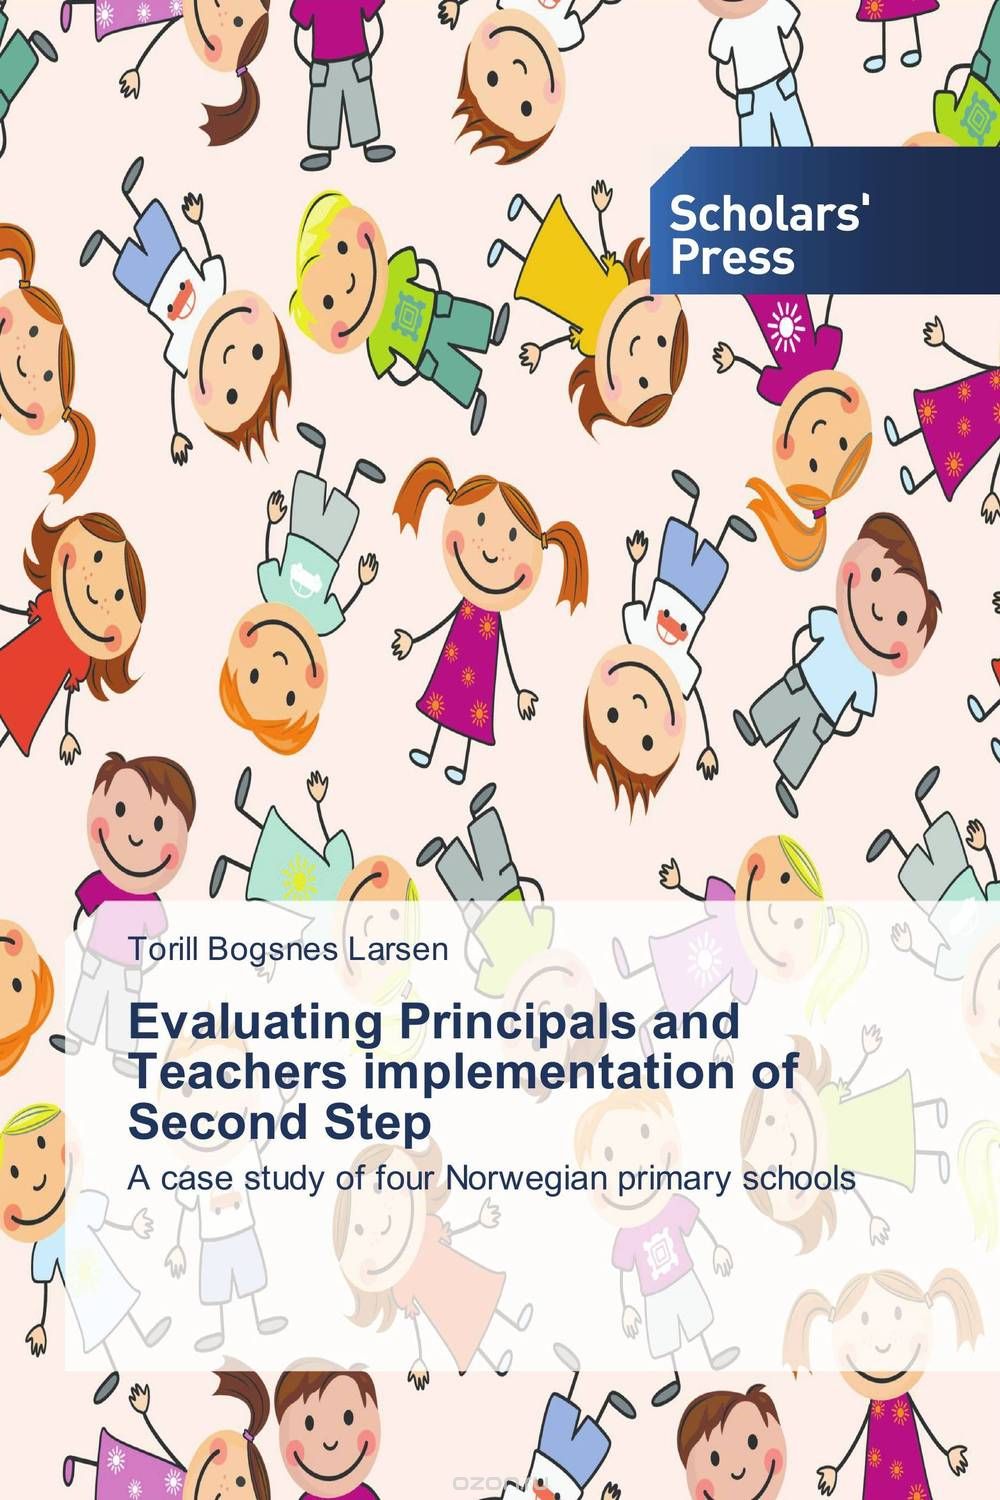 Скачать книгу "Evaluating Principals and Teachers implementation of Second Step"